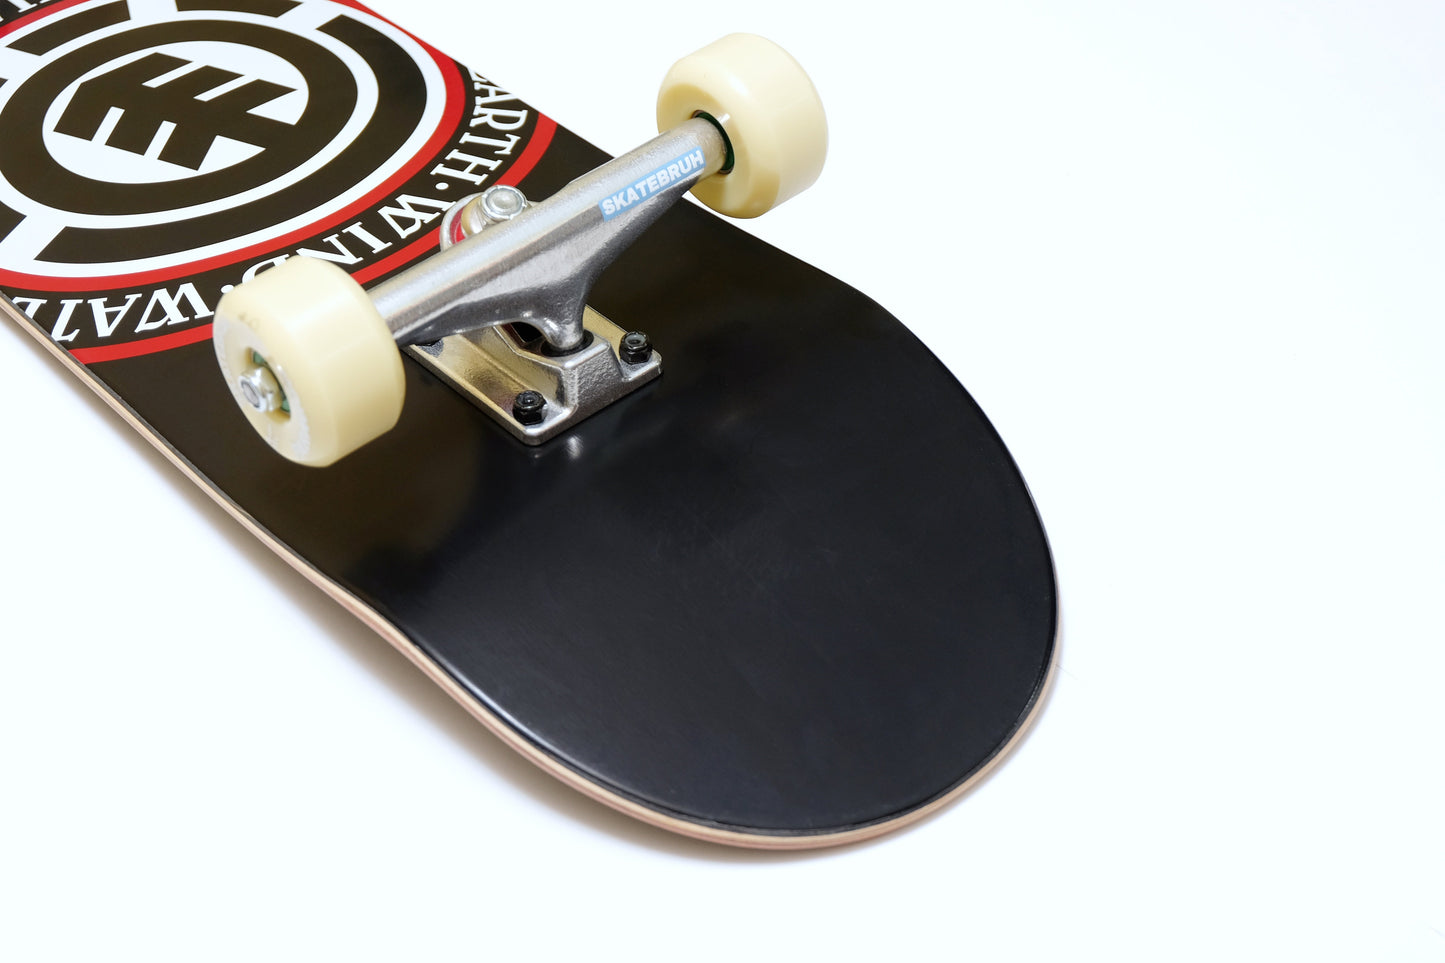 Element Seal skateboard - SkatebruhSG